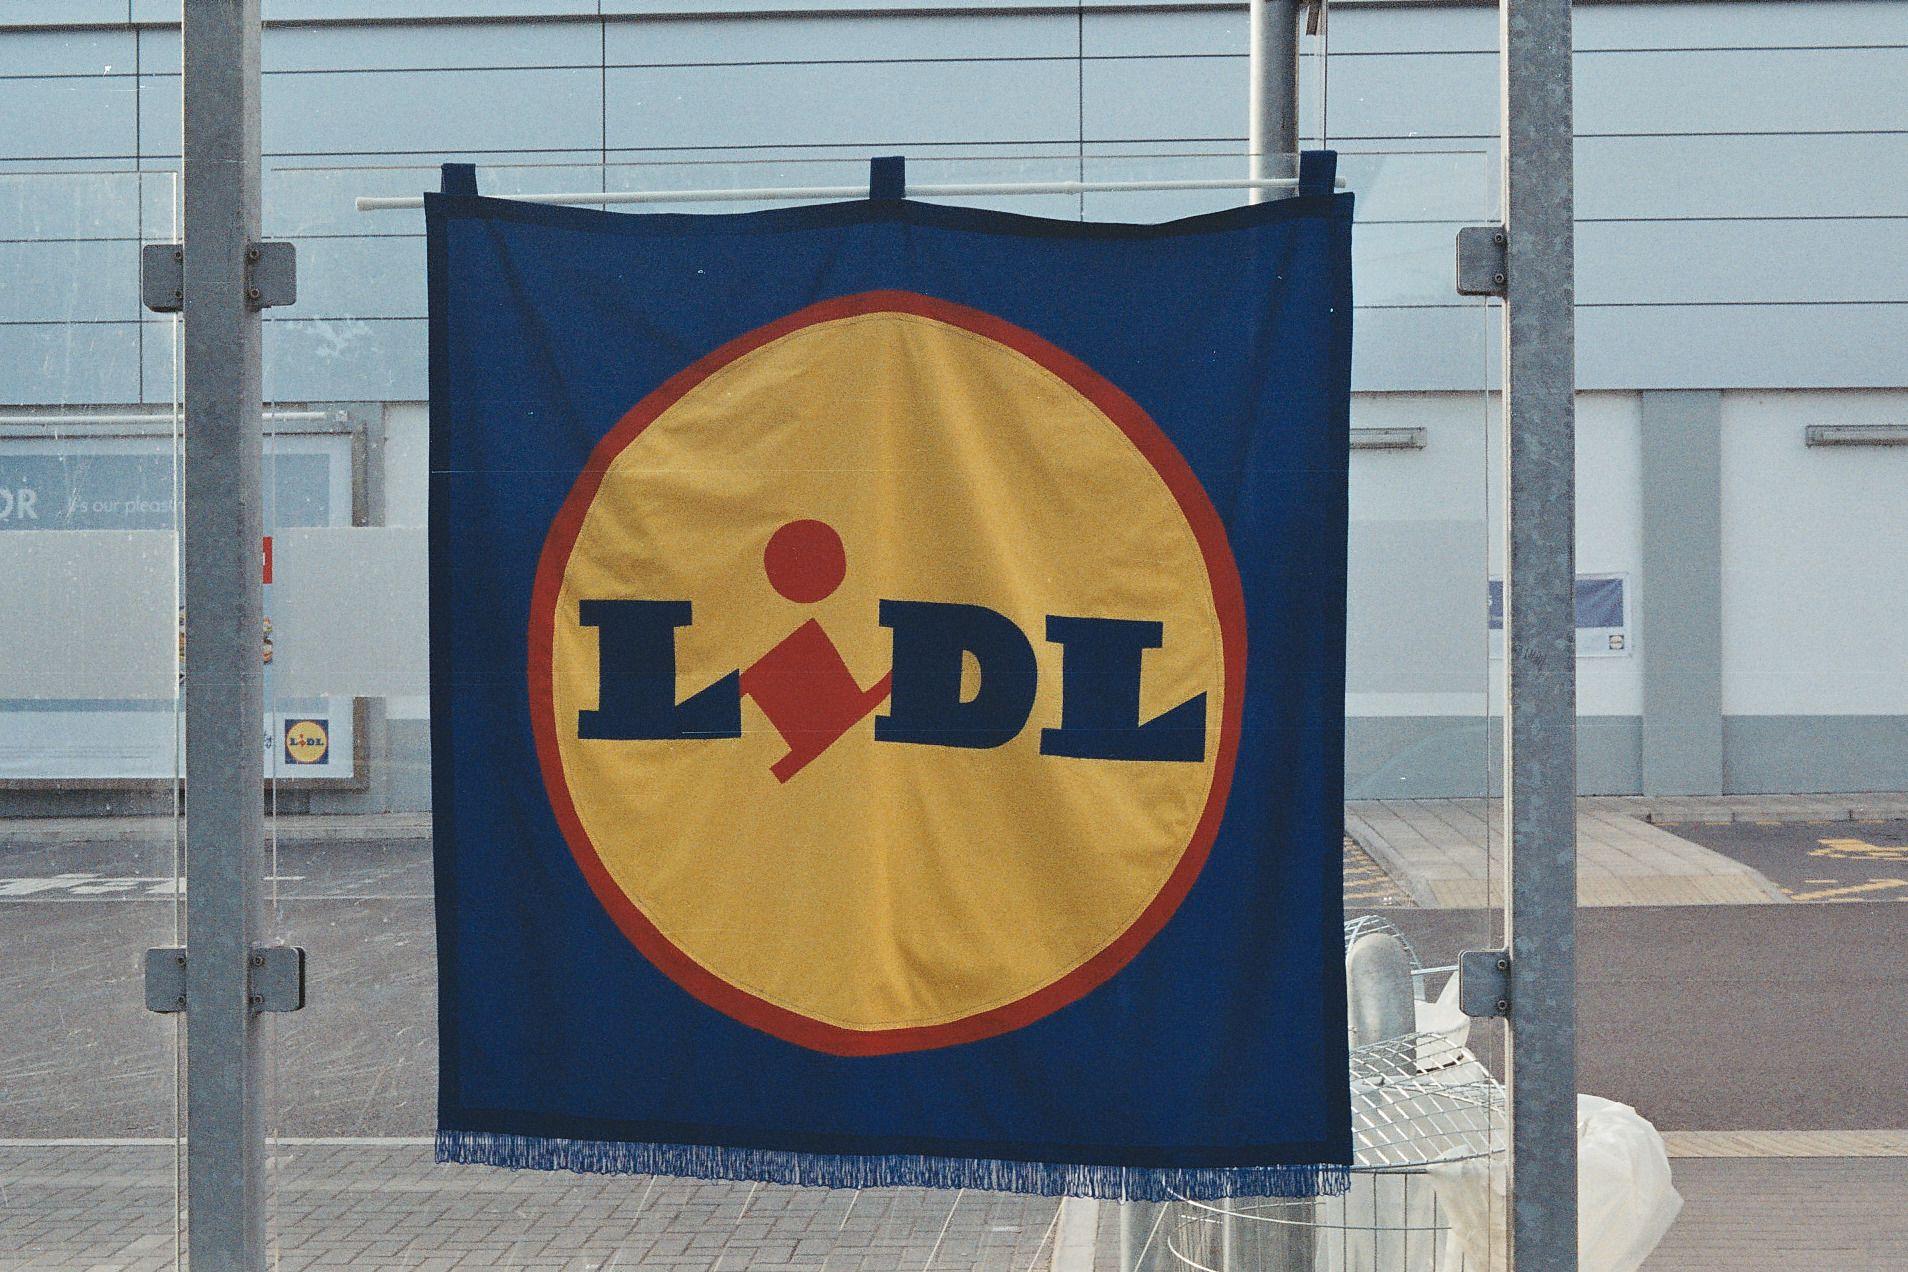 Kroger drops private brand lawsuit against Lidl